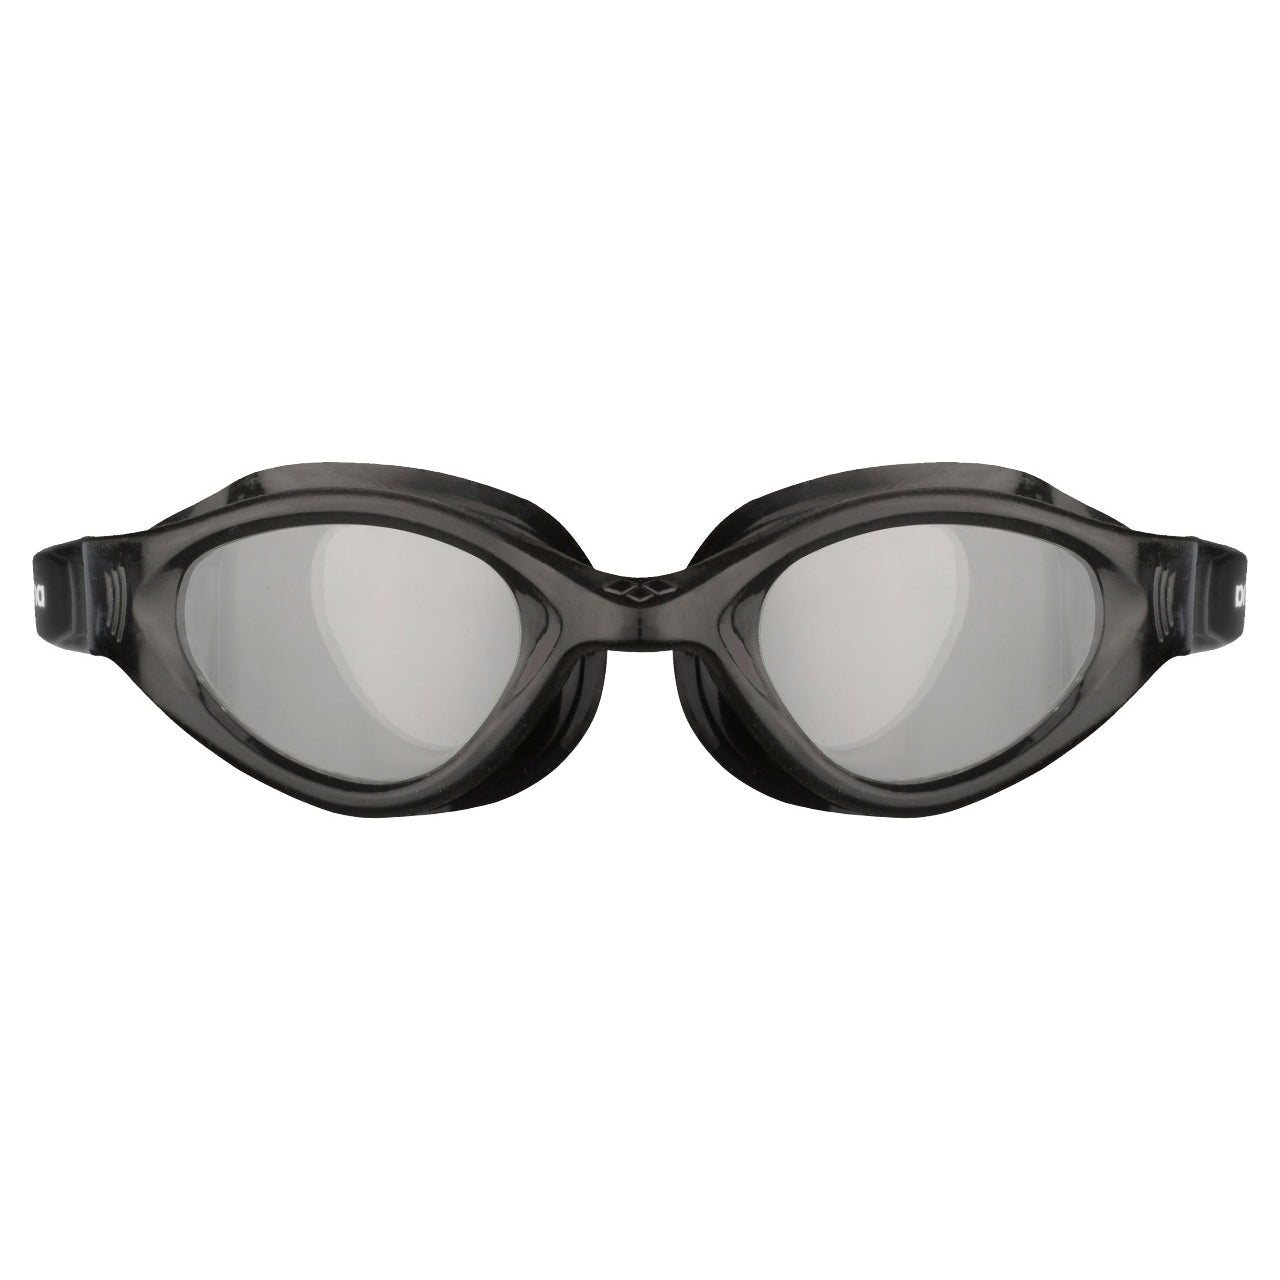 Arena Cruiser Evo svømmebrille - Klar/Sort